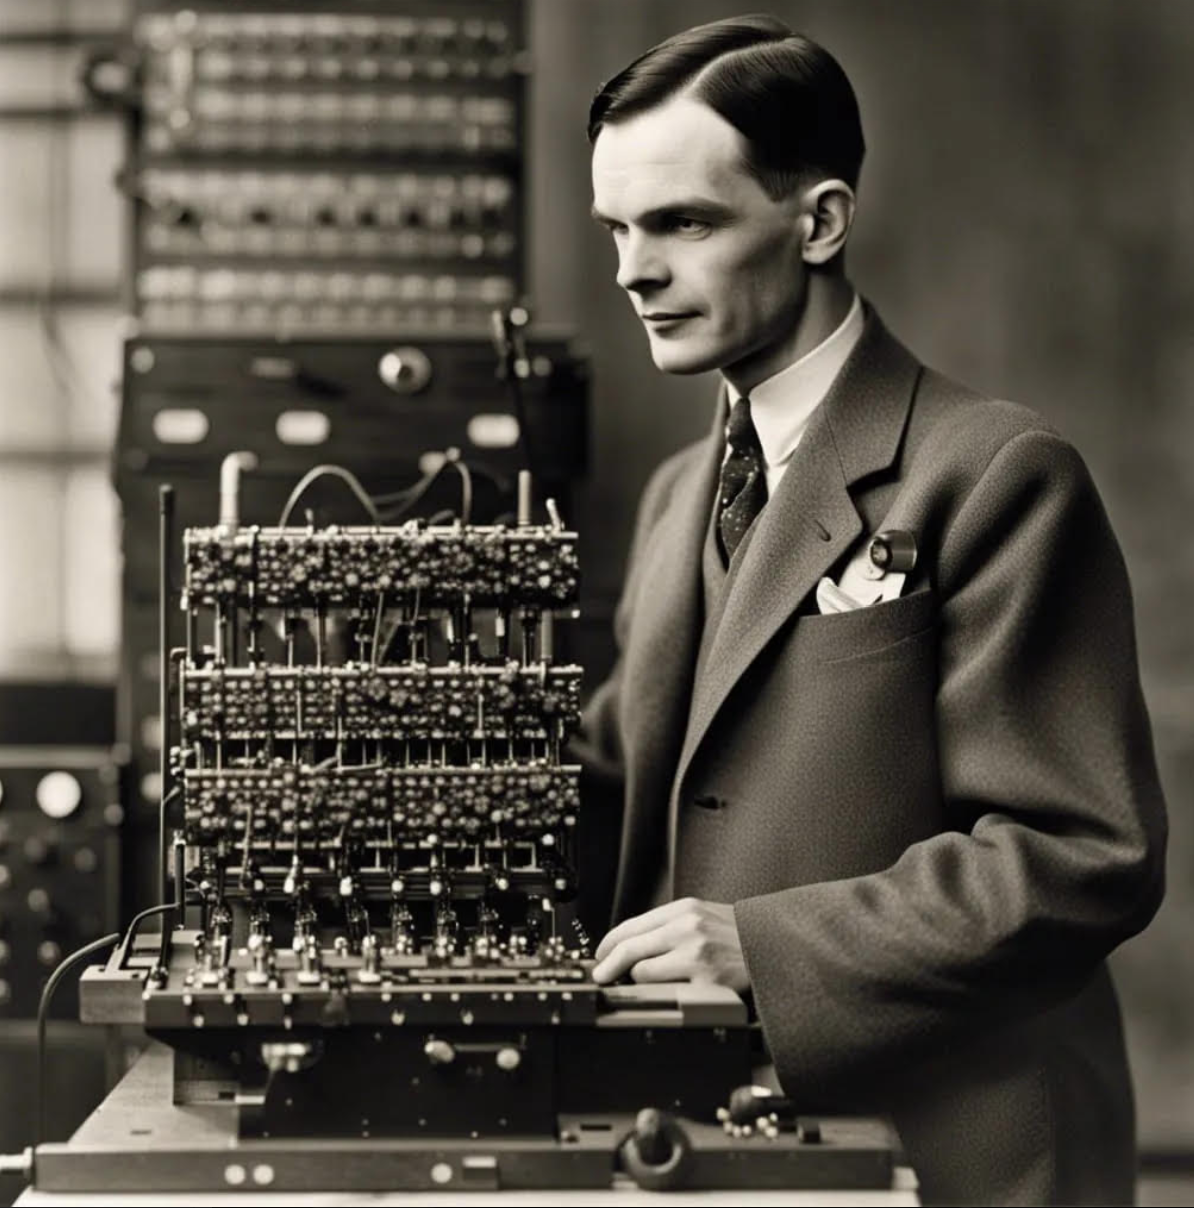 A man in 1940s attire standing beside computer equipment